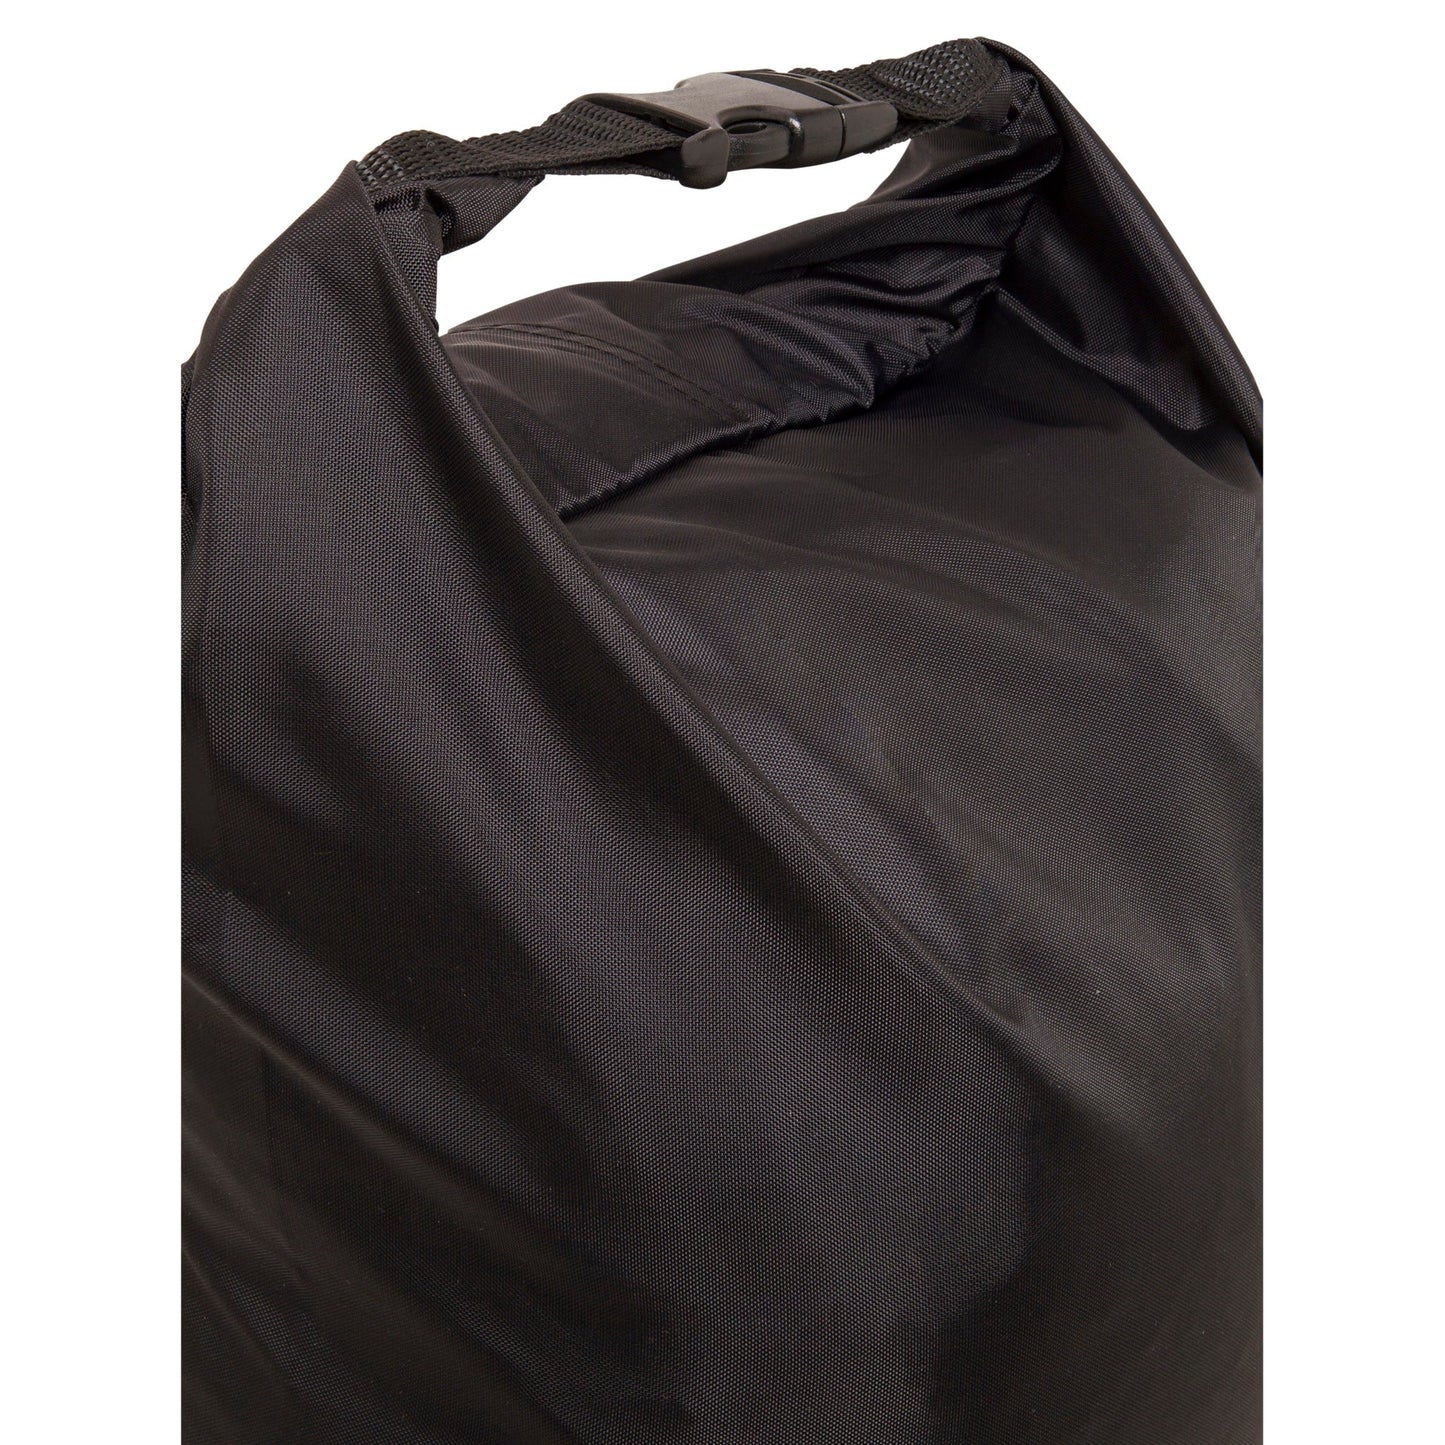 Roll Top Dry Bag